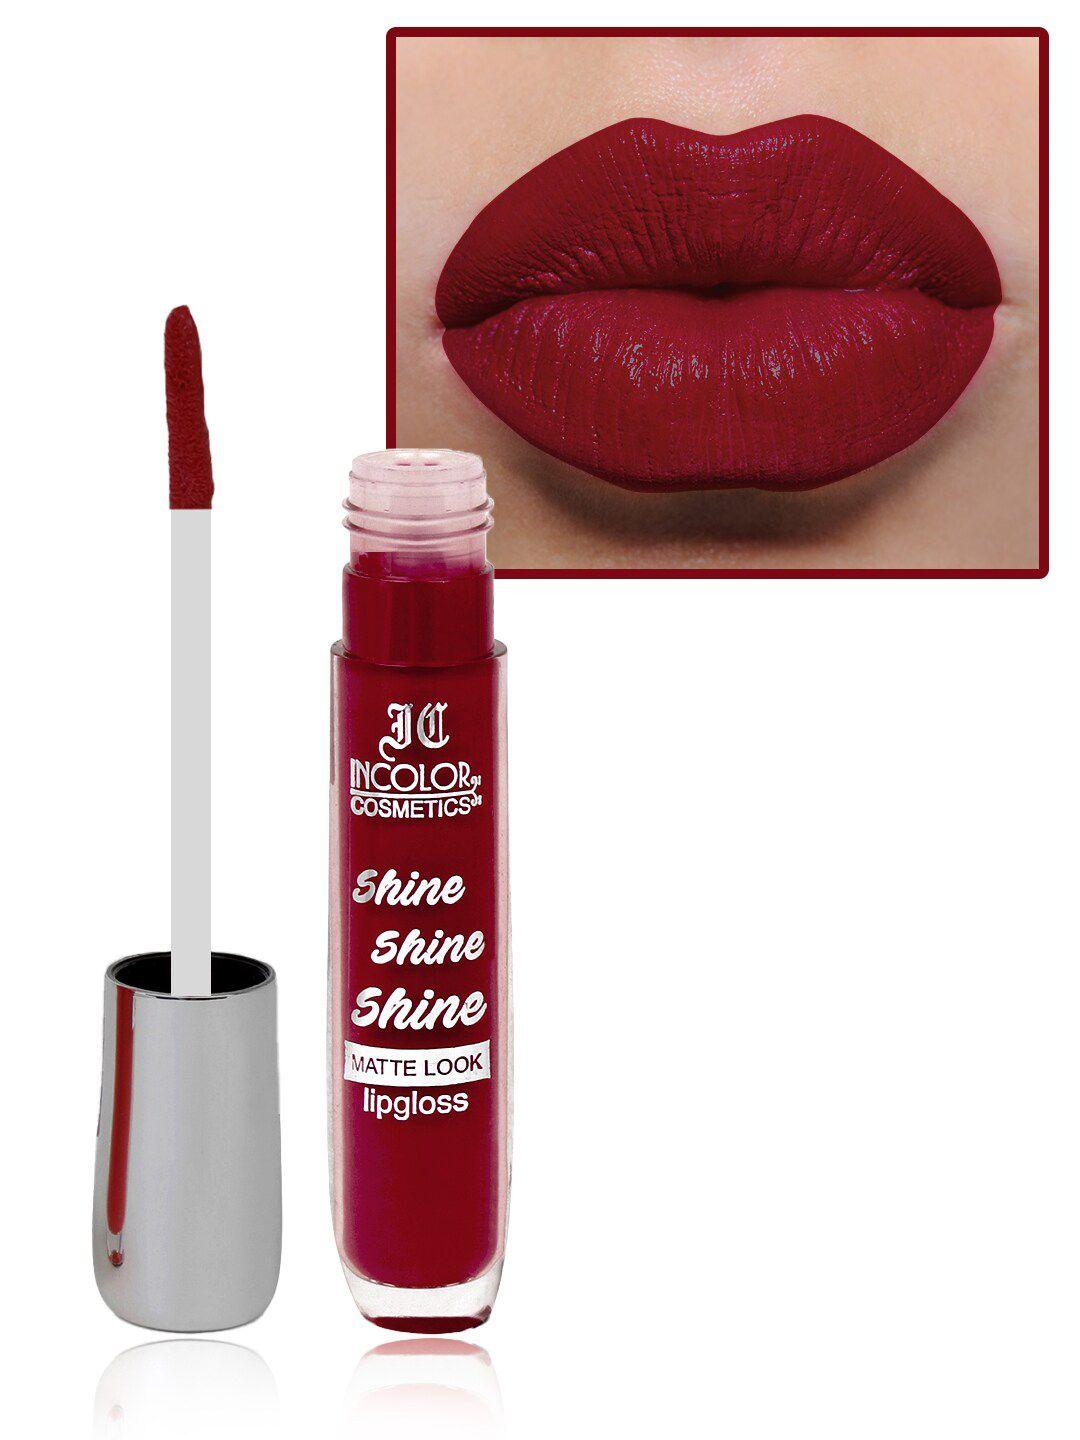 incolor-shine-shine-shine-long-wearing-lightweight-matte-look-lip-gloss-8ml---shade-02